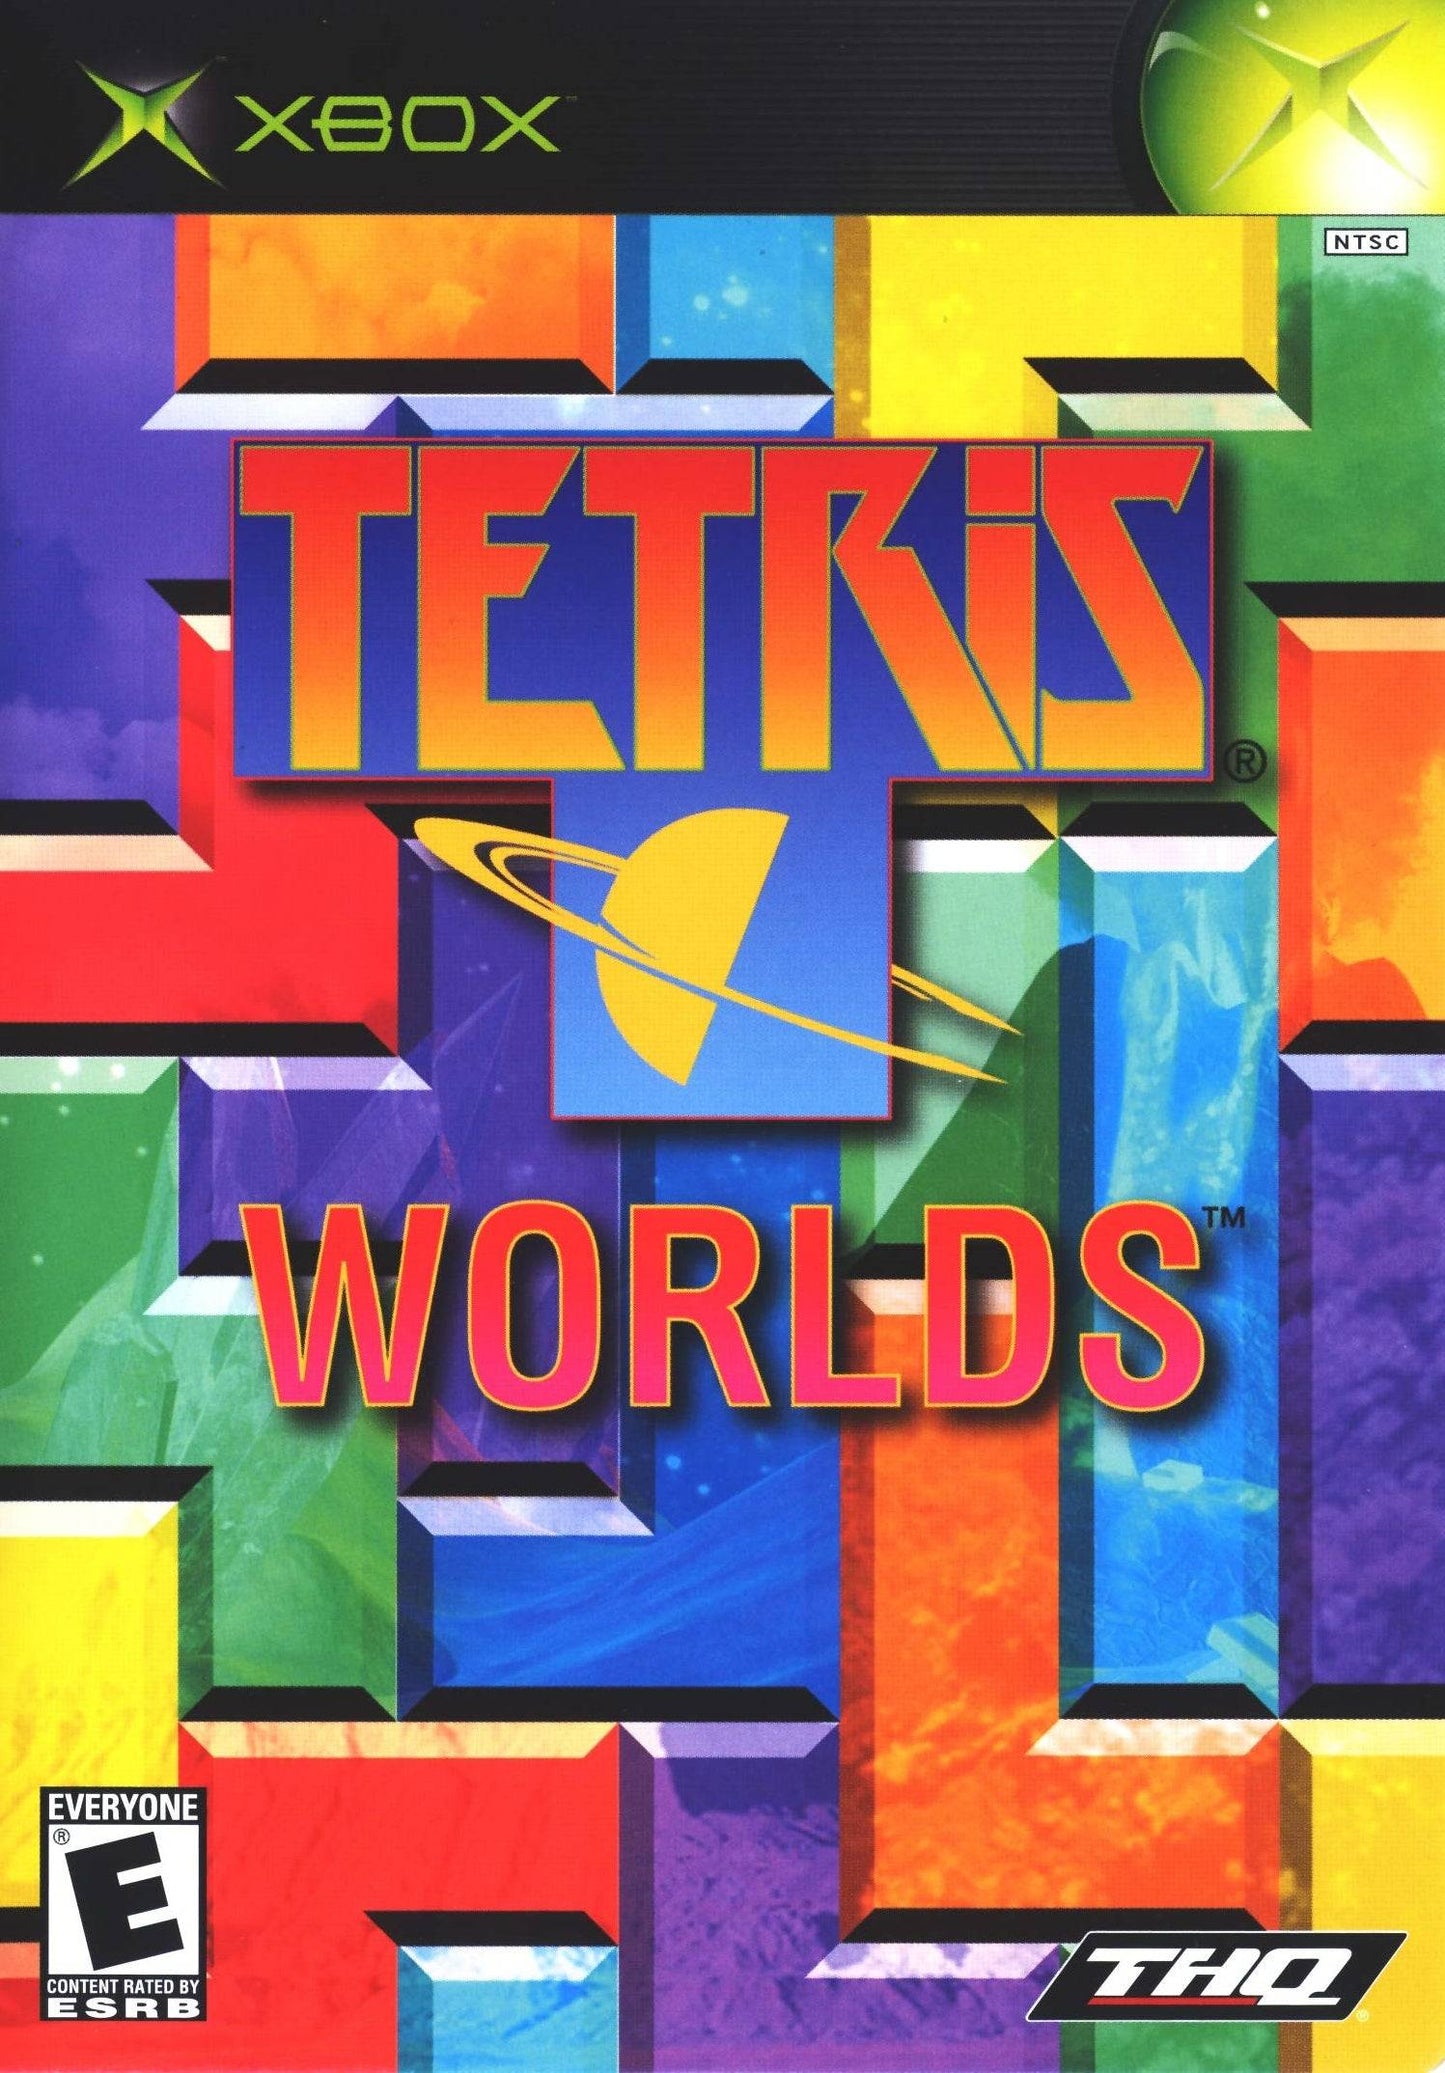 TETRIS WORLDS (XBOX) - jeux video game-x